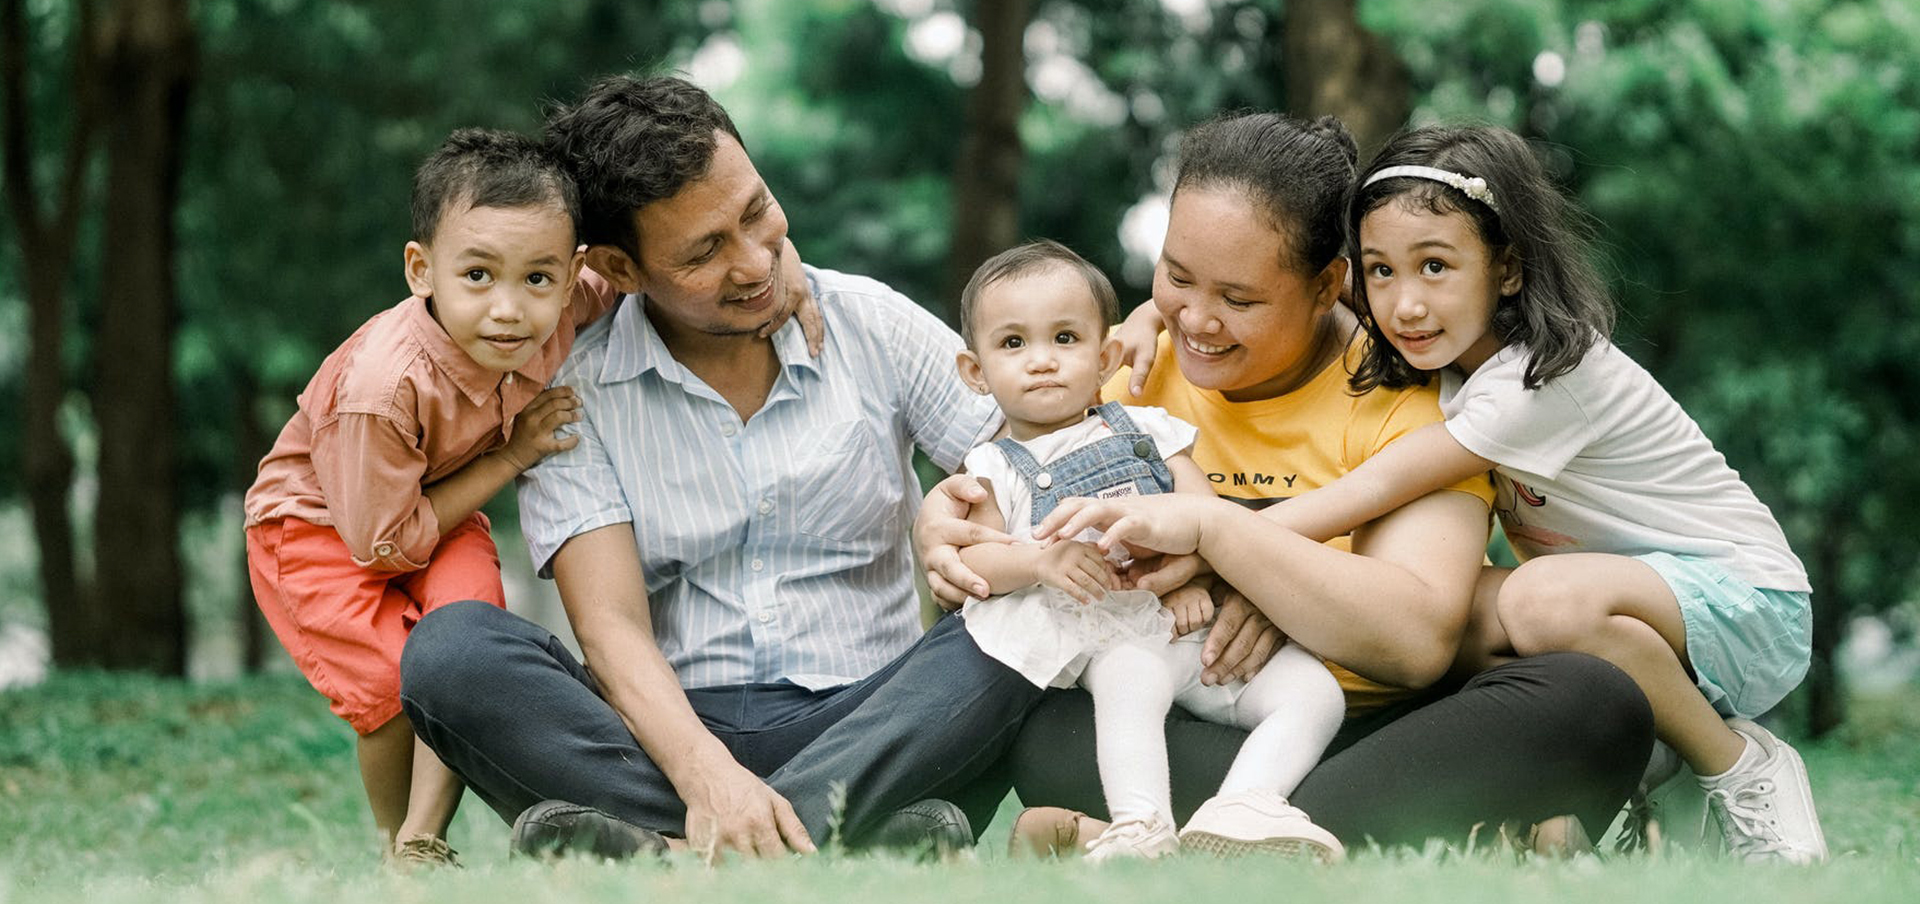 Filipino family sitting in grass